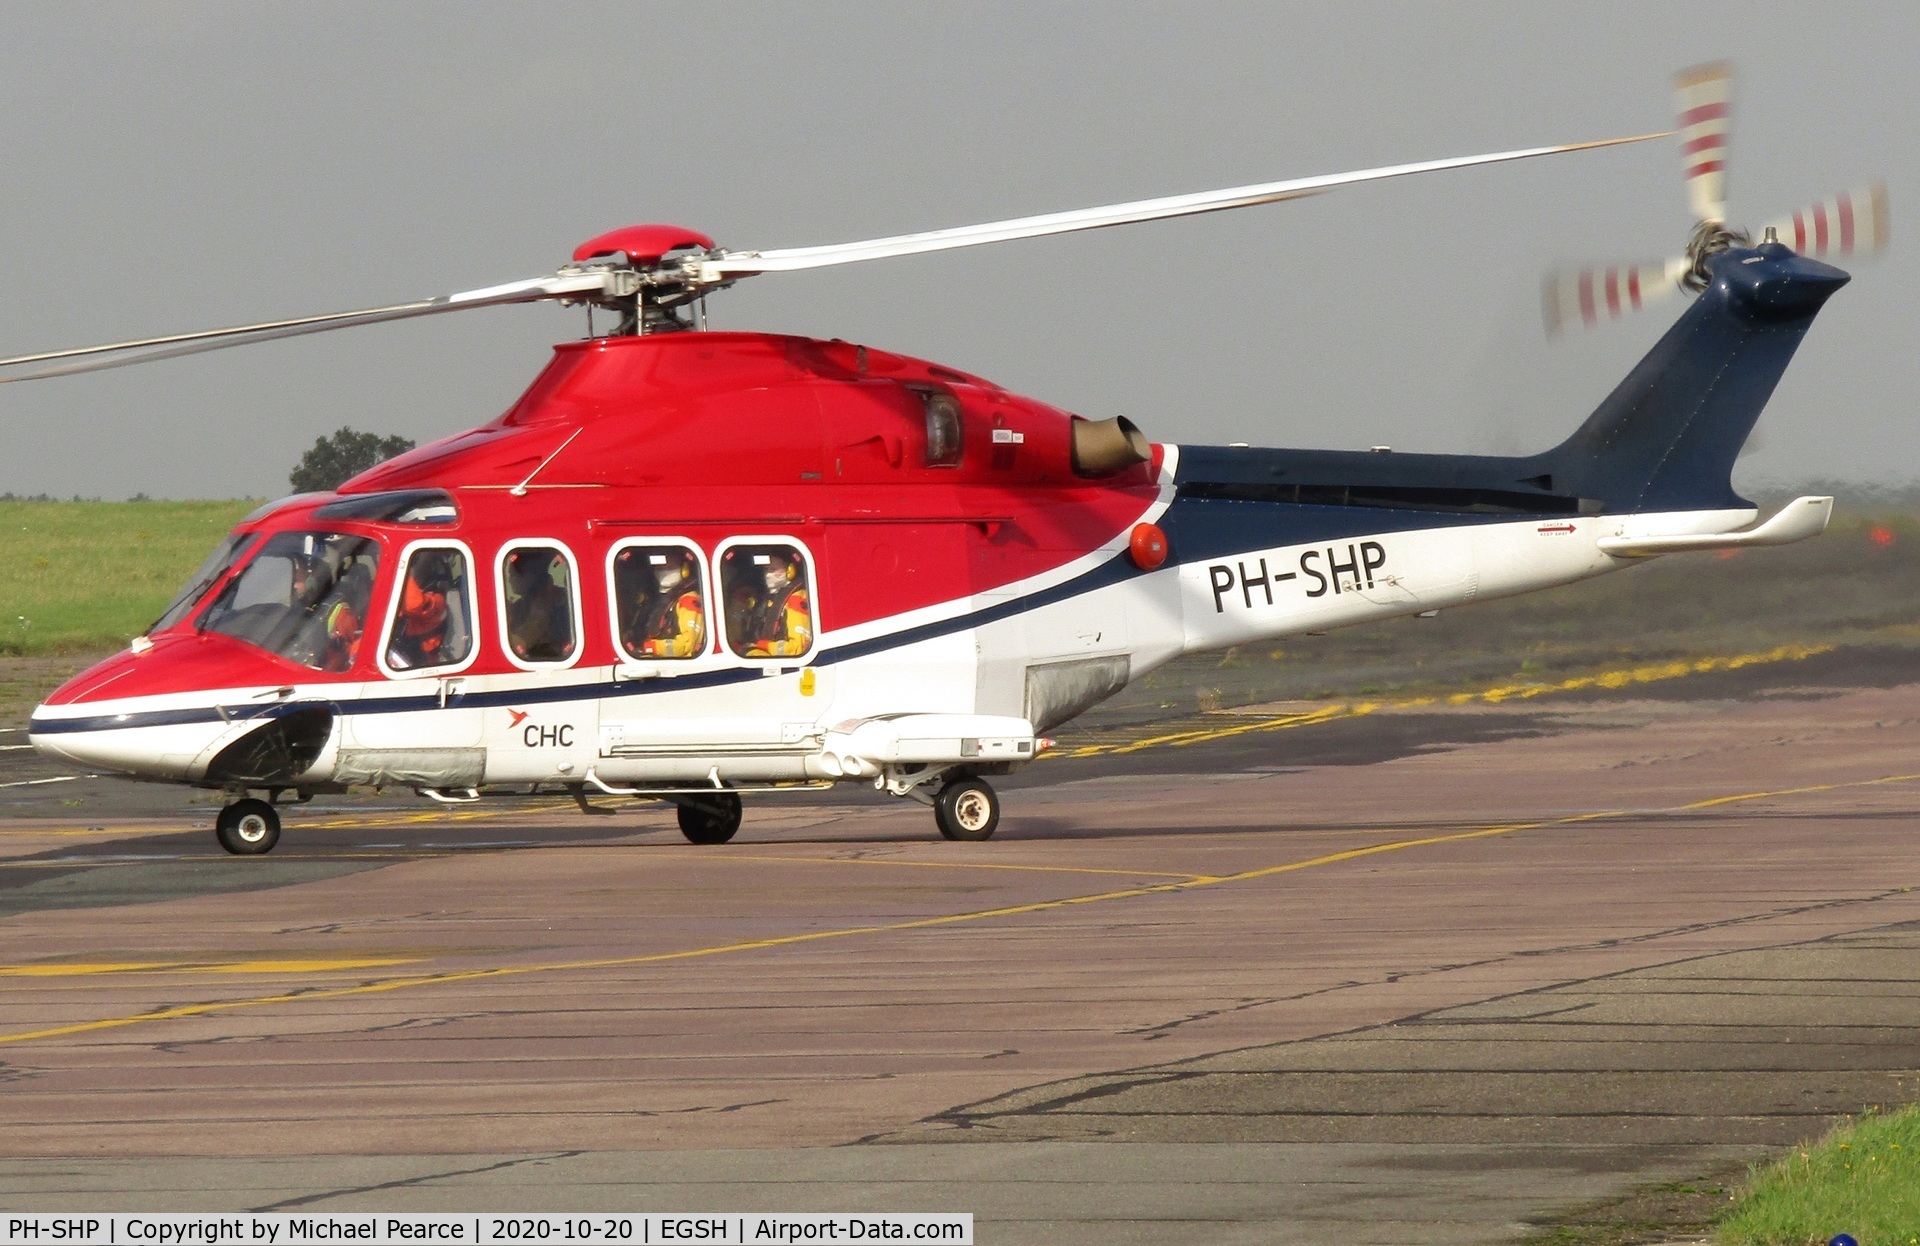 PH-SHP, 2007 AgustaWestland AW-139 C/N 31099, Arriving at SaxonAir from a North Sea gas platform.